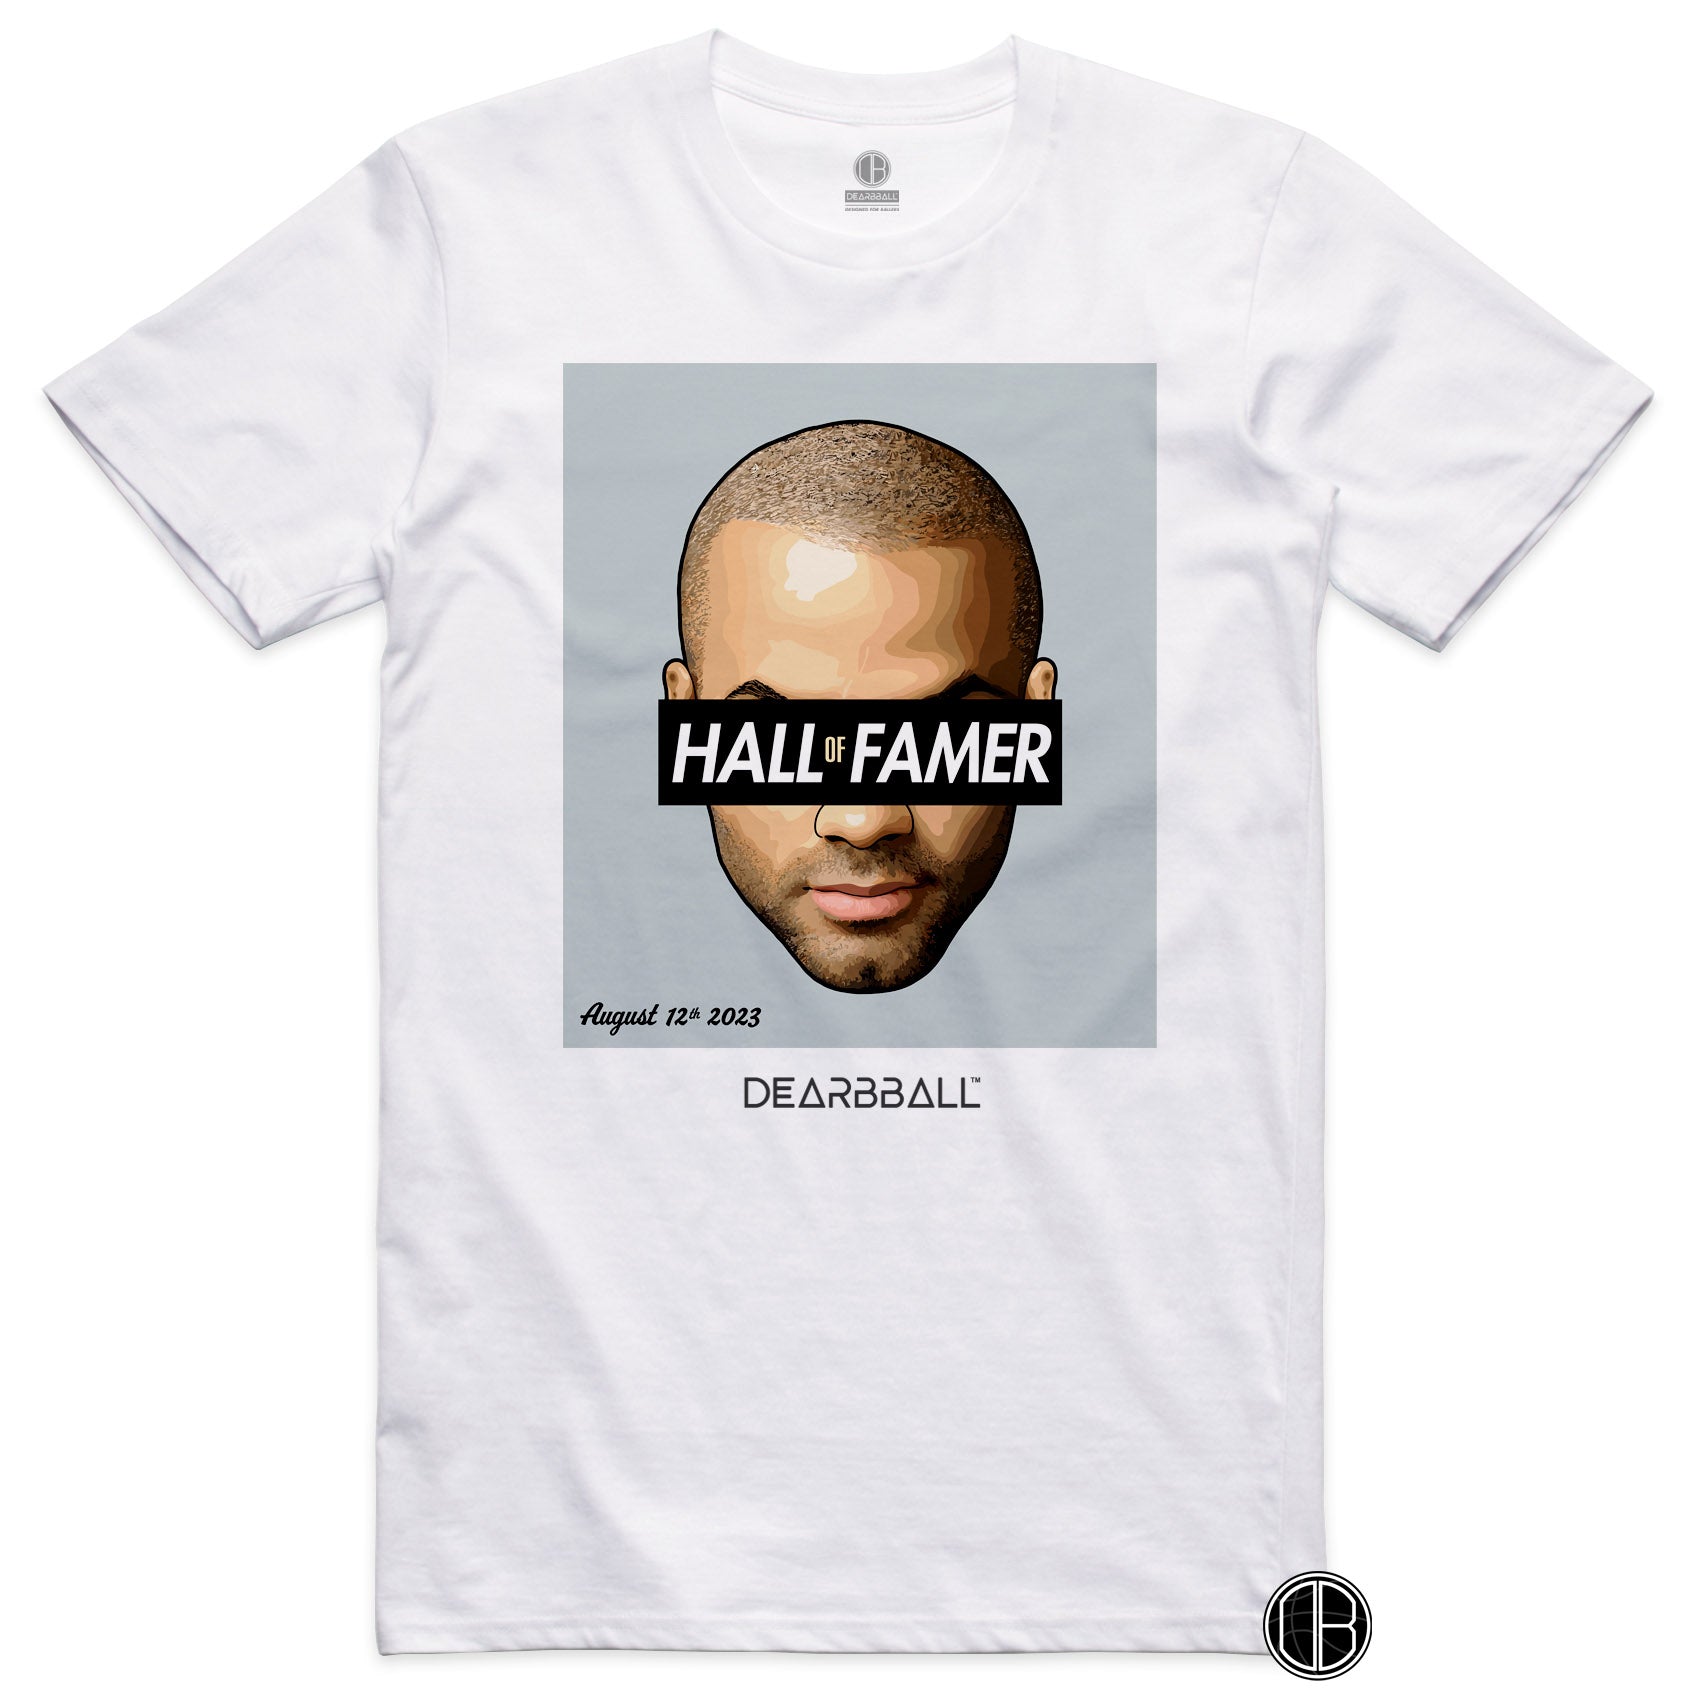 T-shirt DearBBall - HALL of FAMER 12 agosto 23